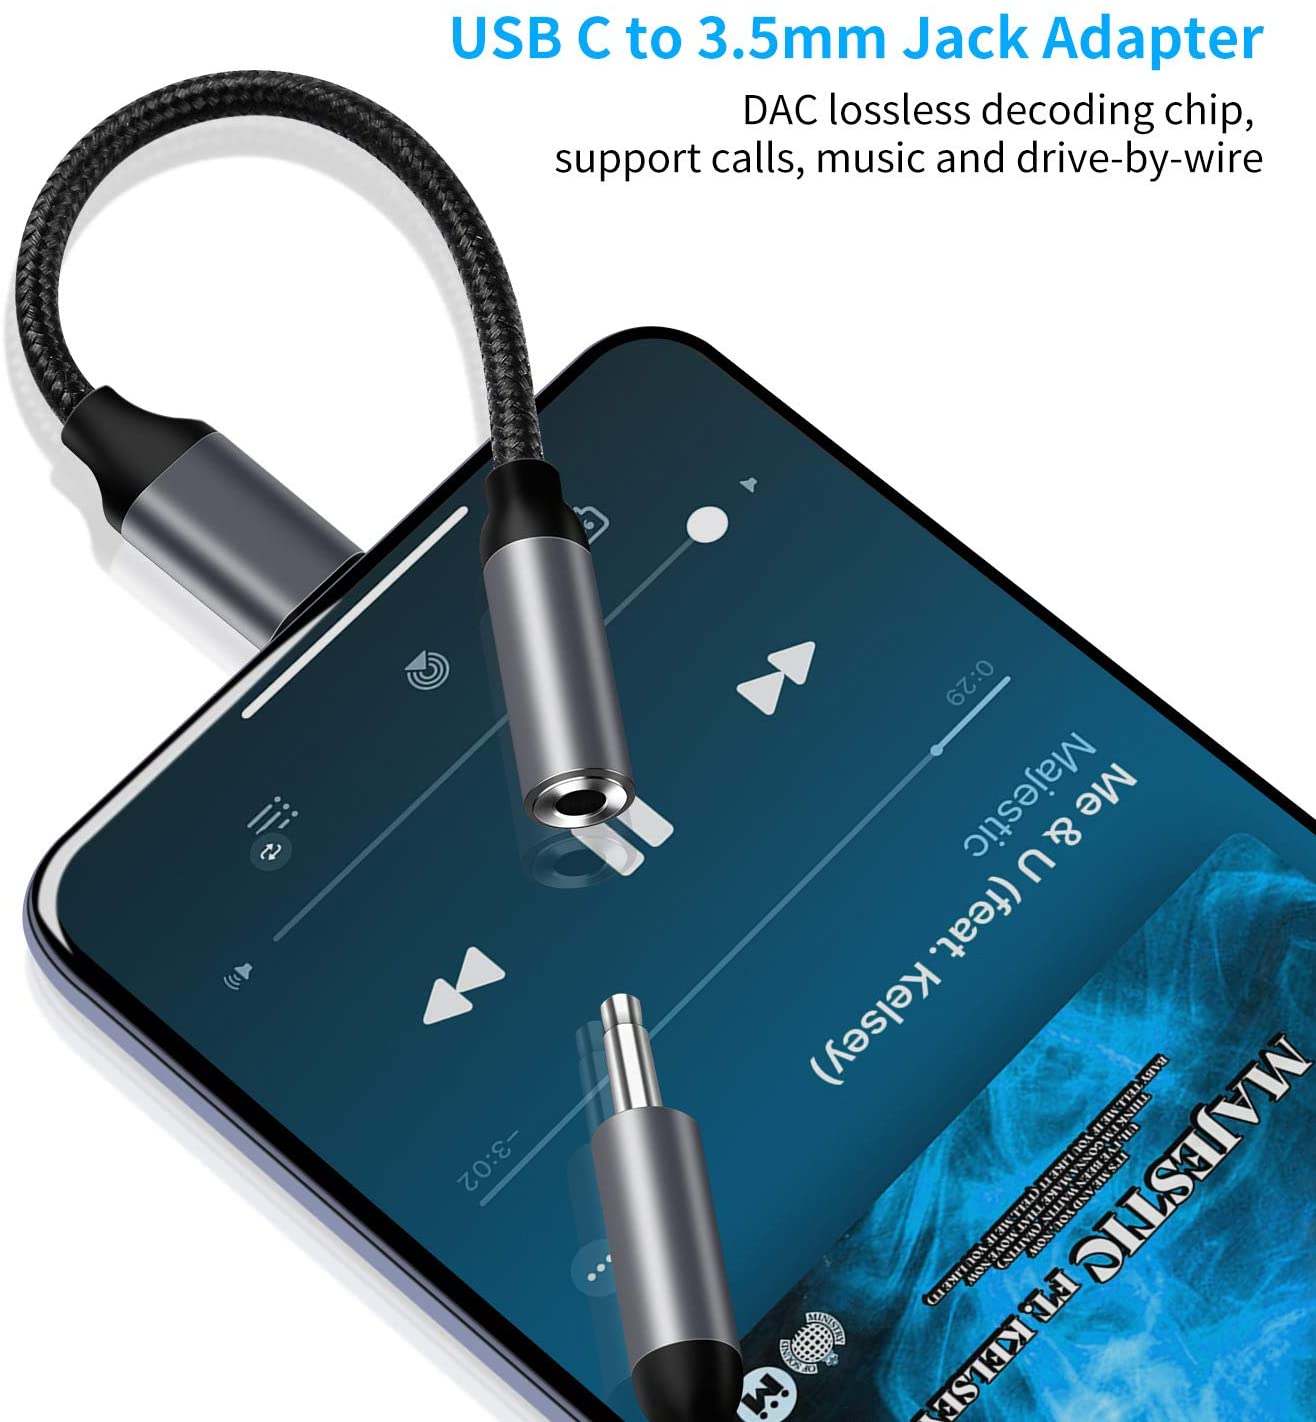 USB C to 3.5mm Headphone Jack Adapter.